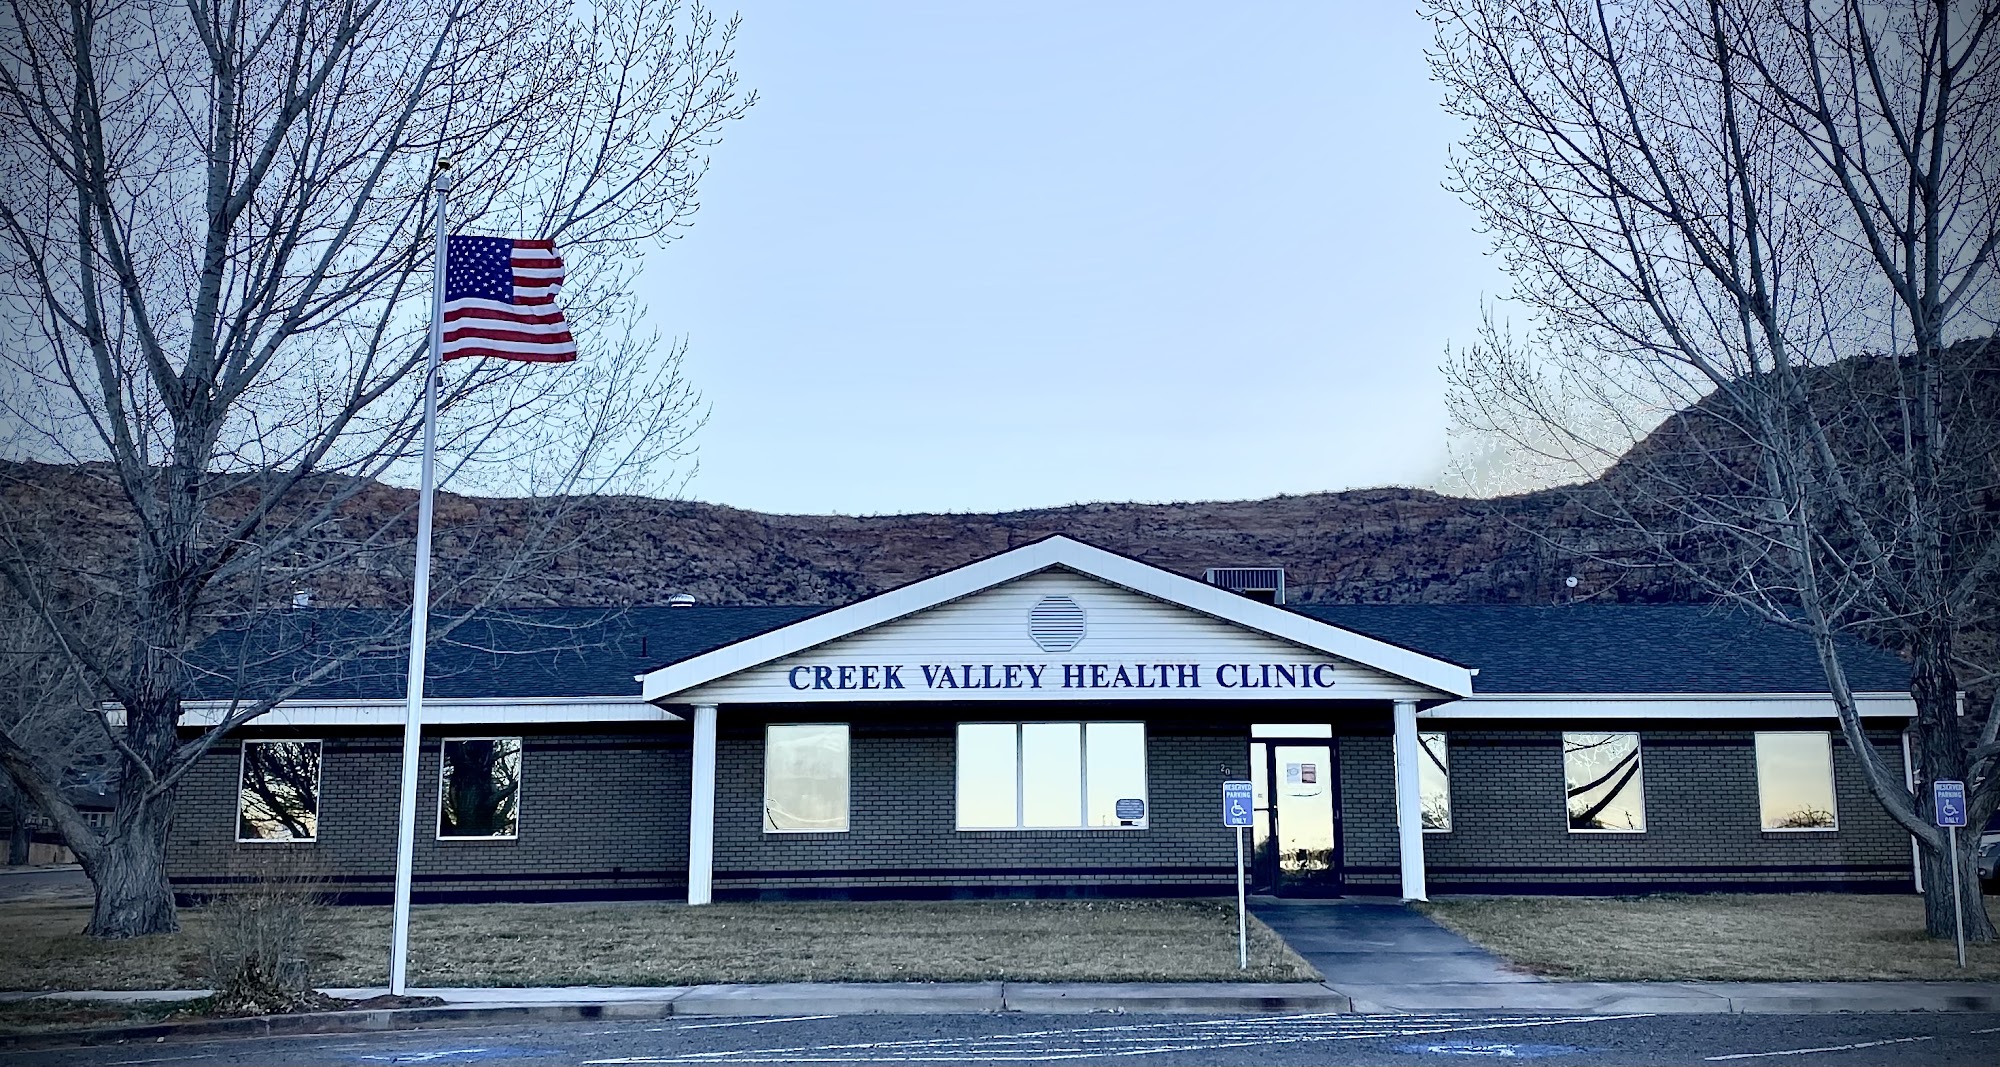 Creek Valley Health Clinic 20 Colvin St, Colorado City Arizona 86021